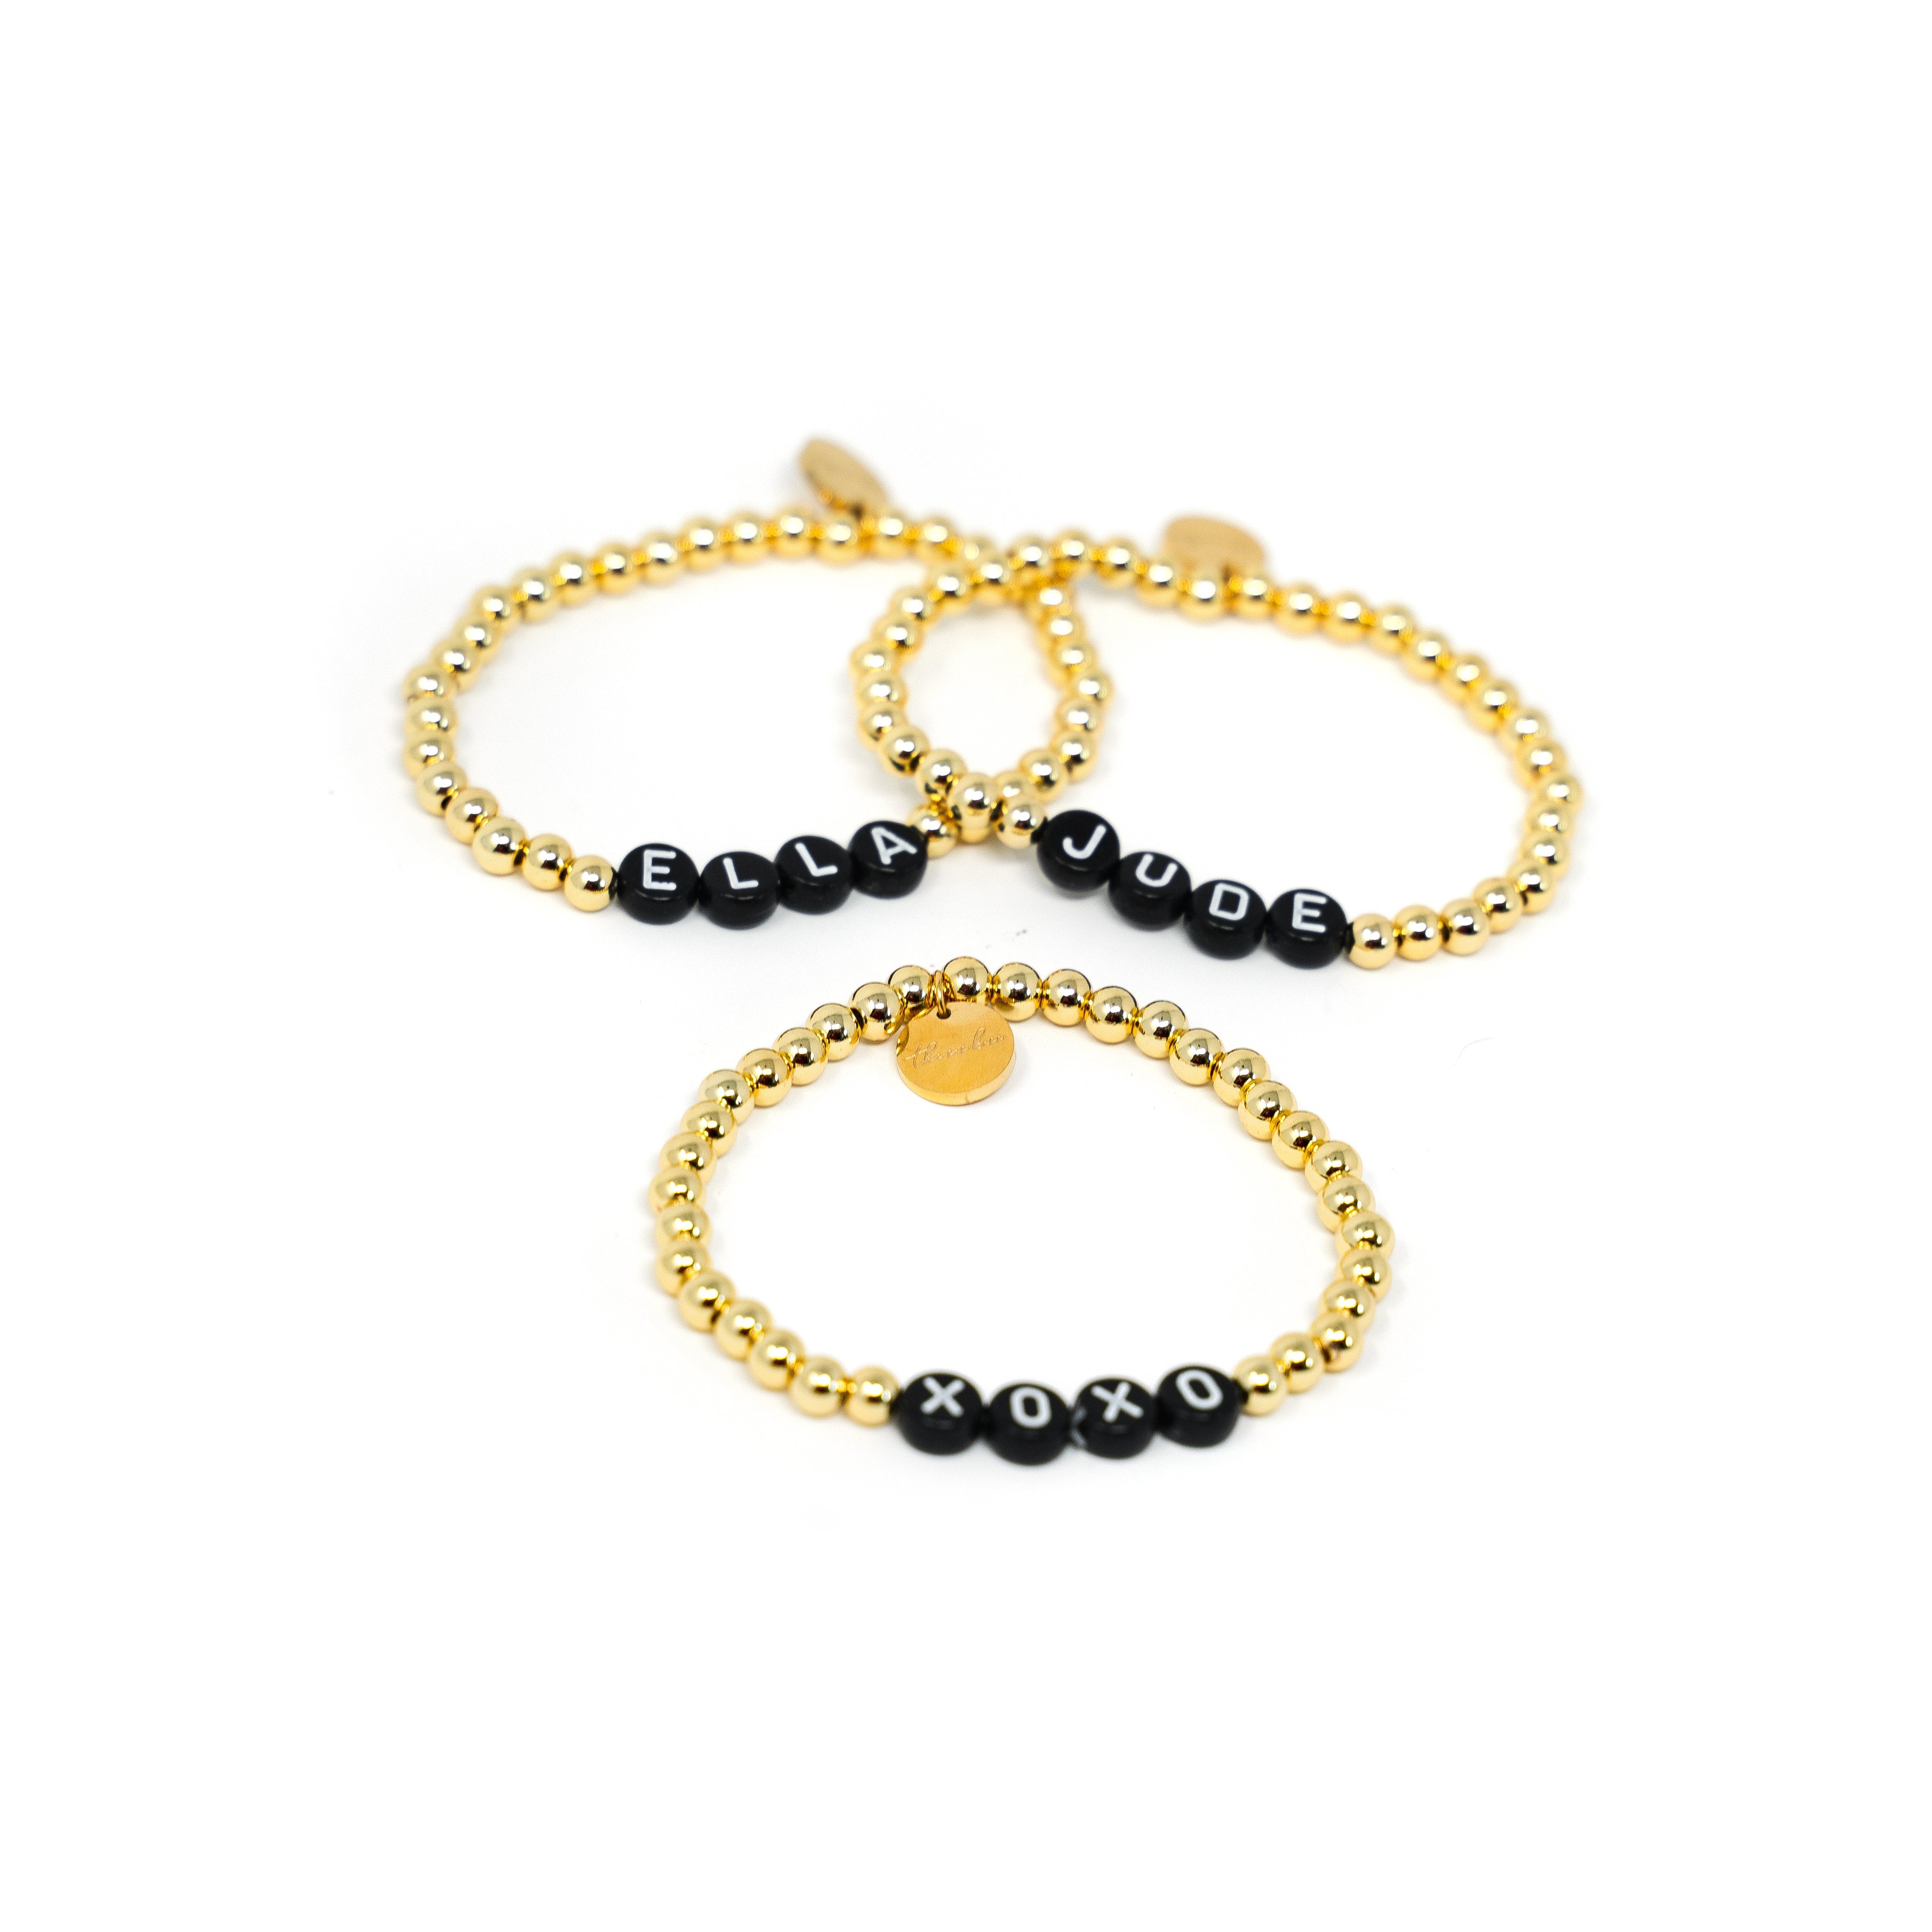 Customized Stretch Beaded Bracelets White Beads Black Letters